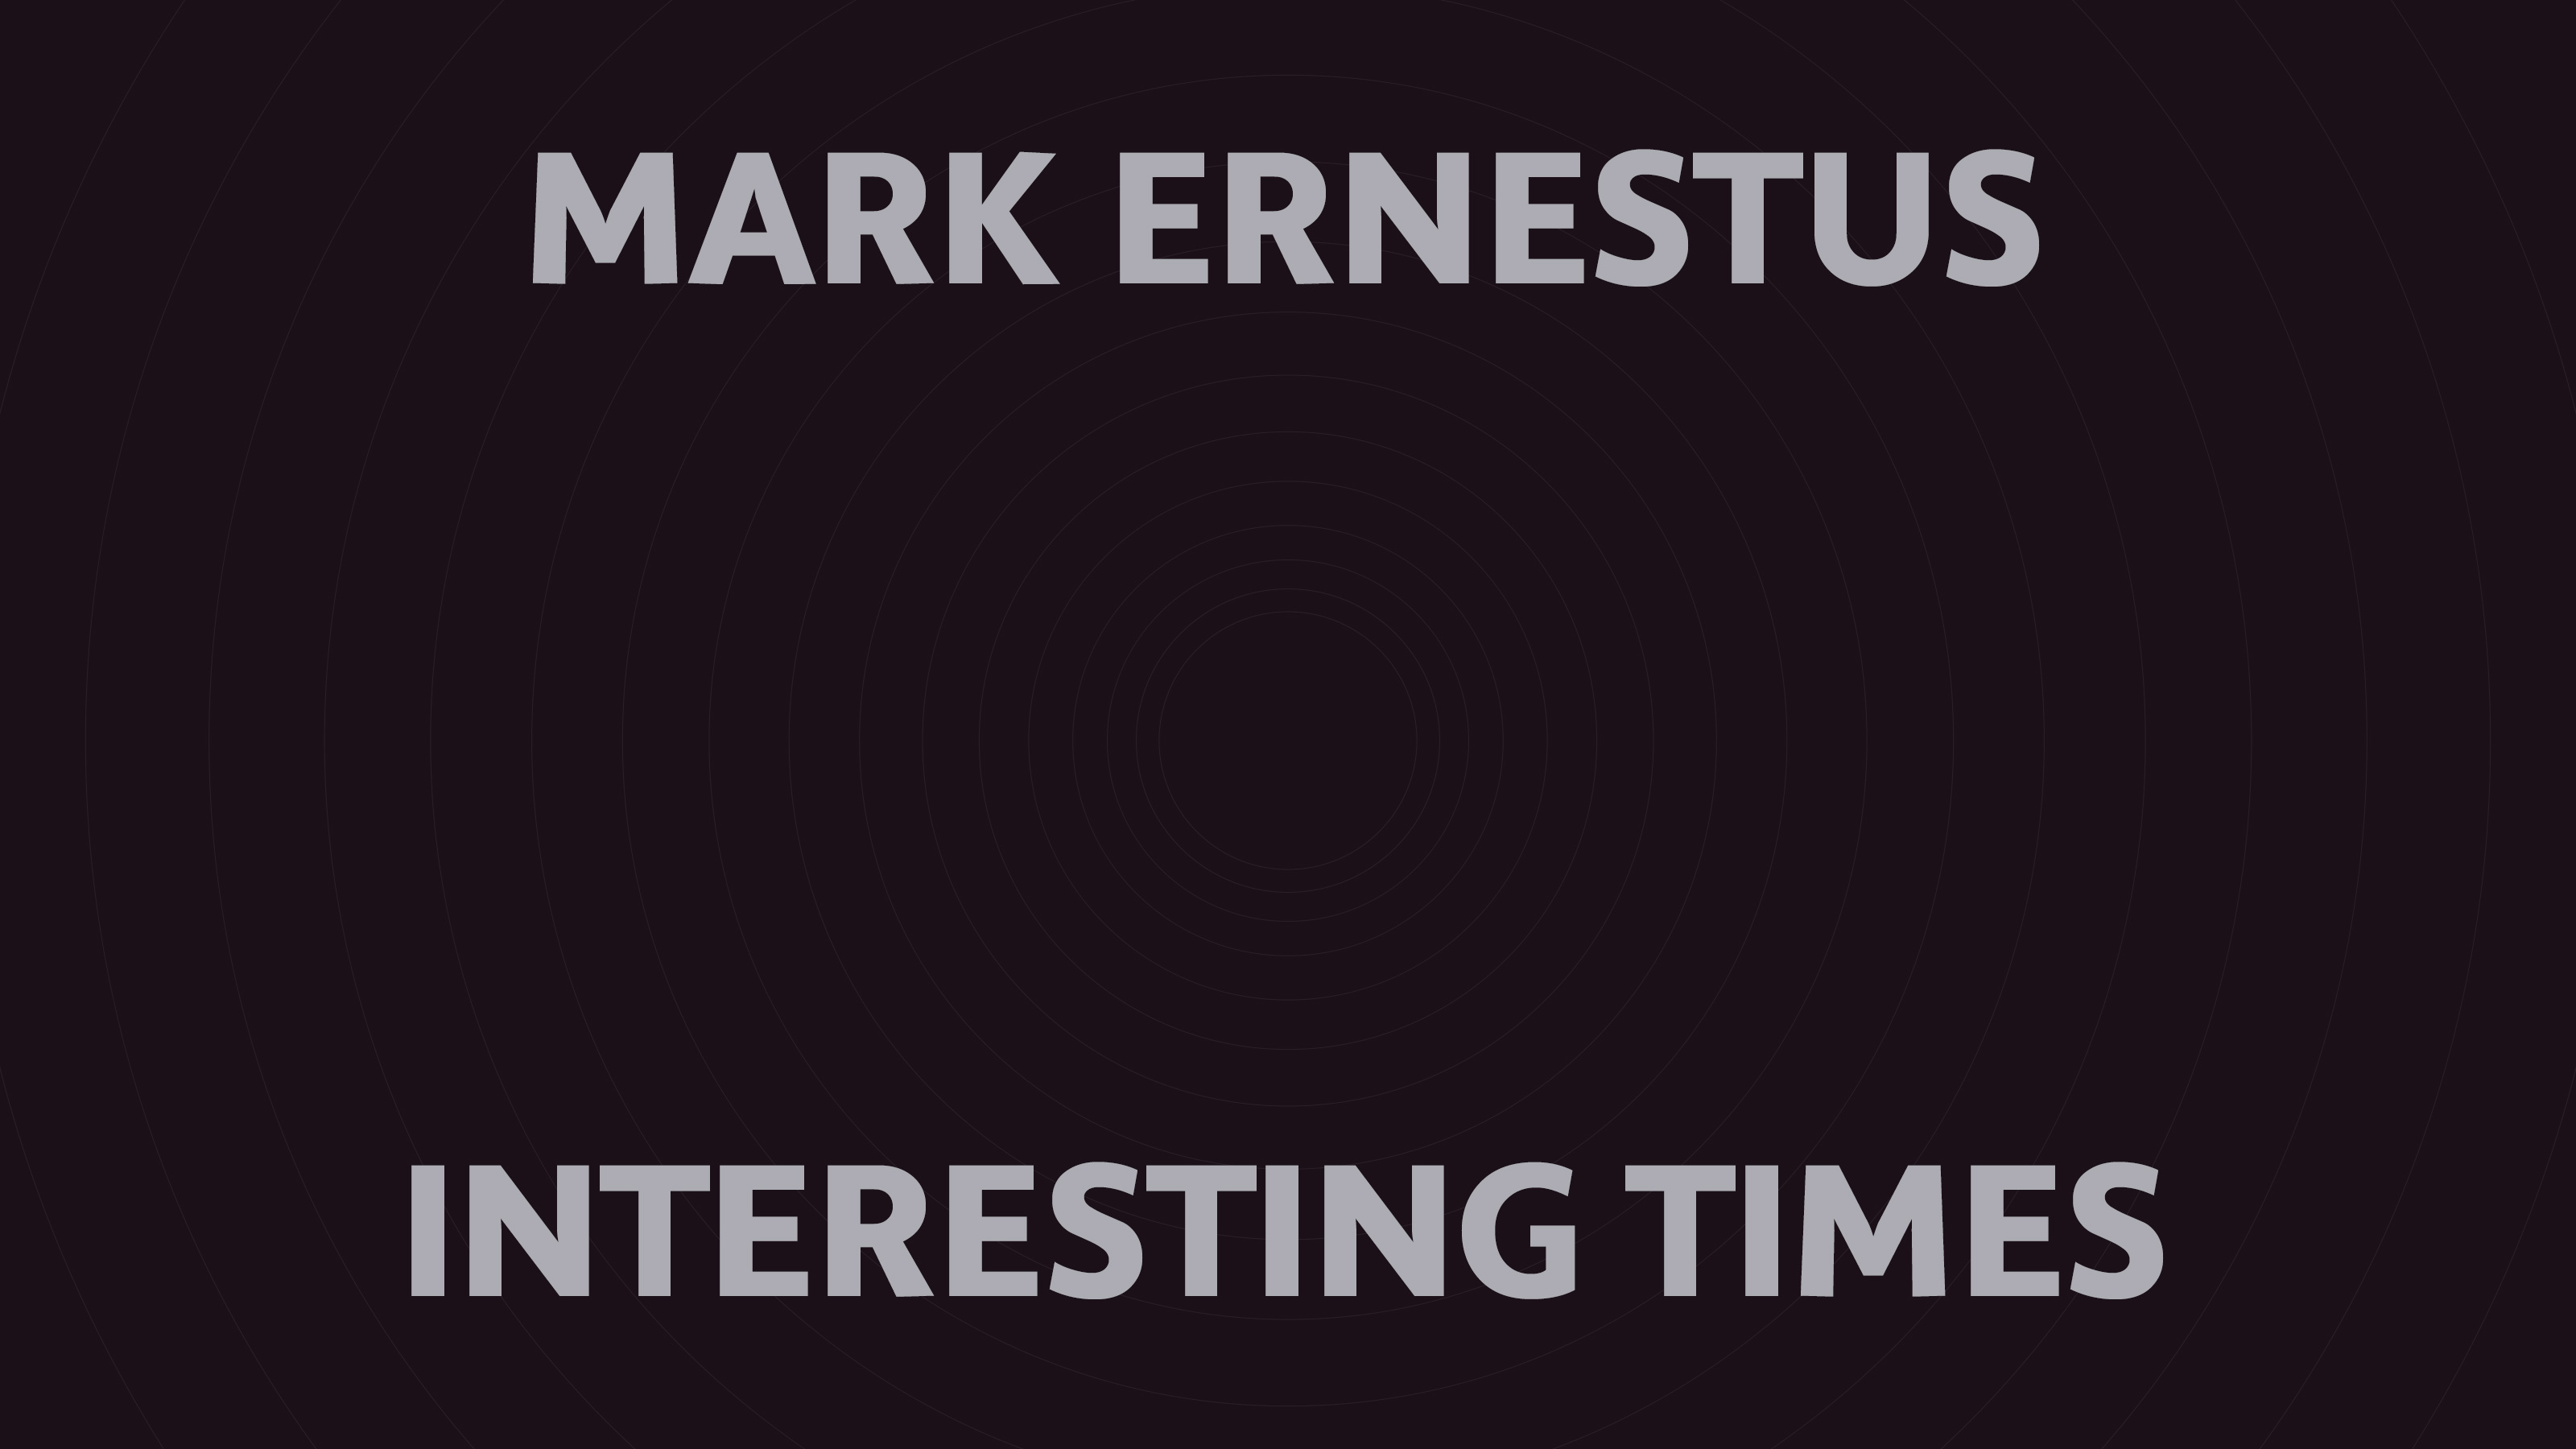 Mark Ernestus: Interesting times